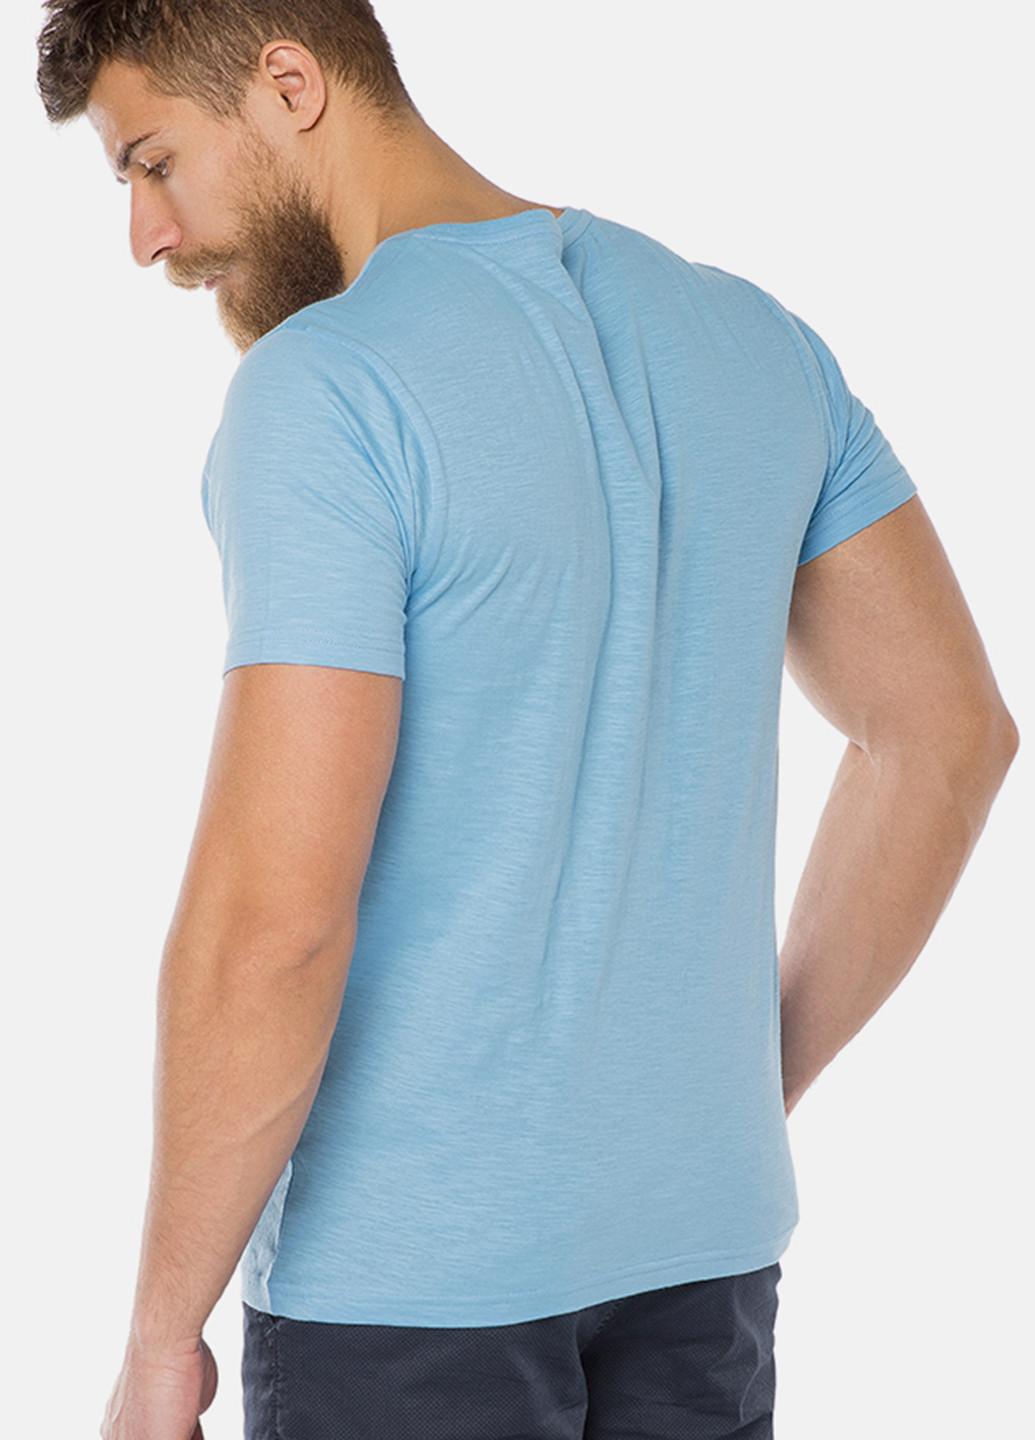 Голубая футболка MR 520